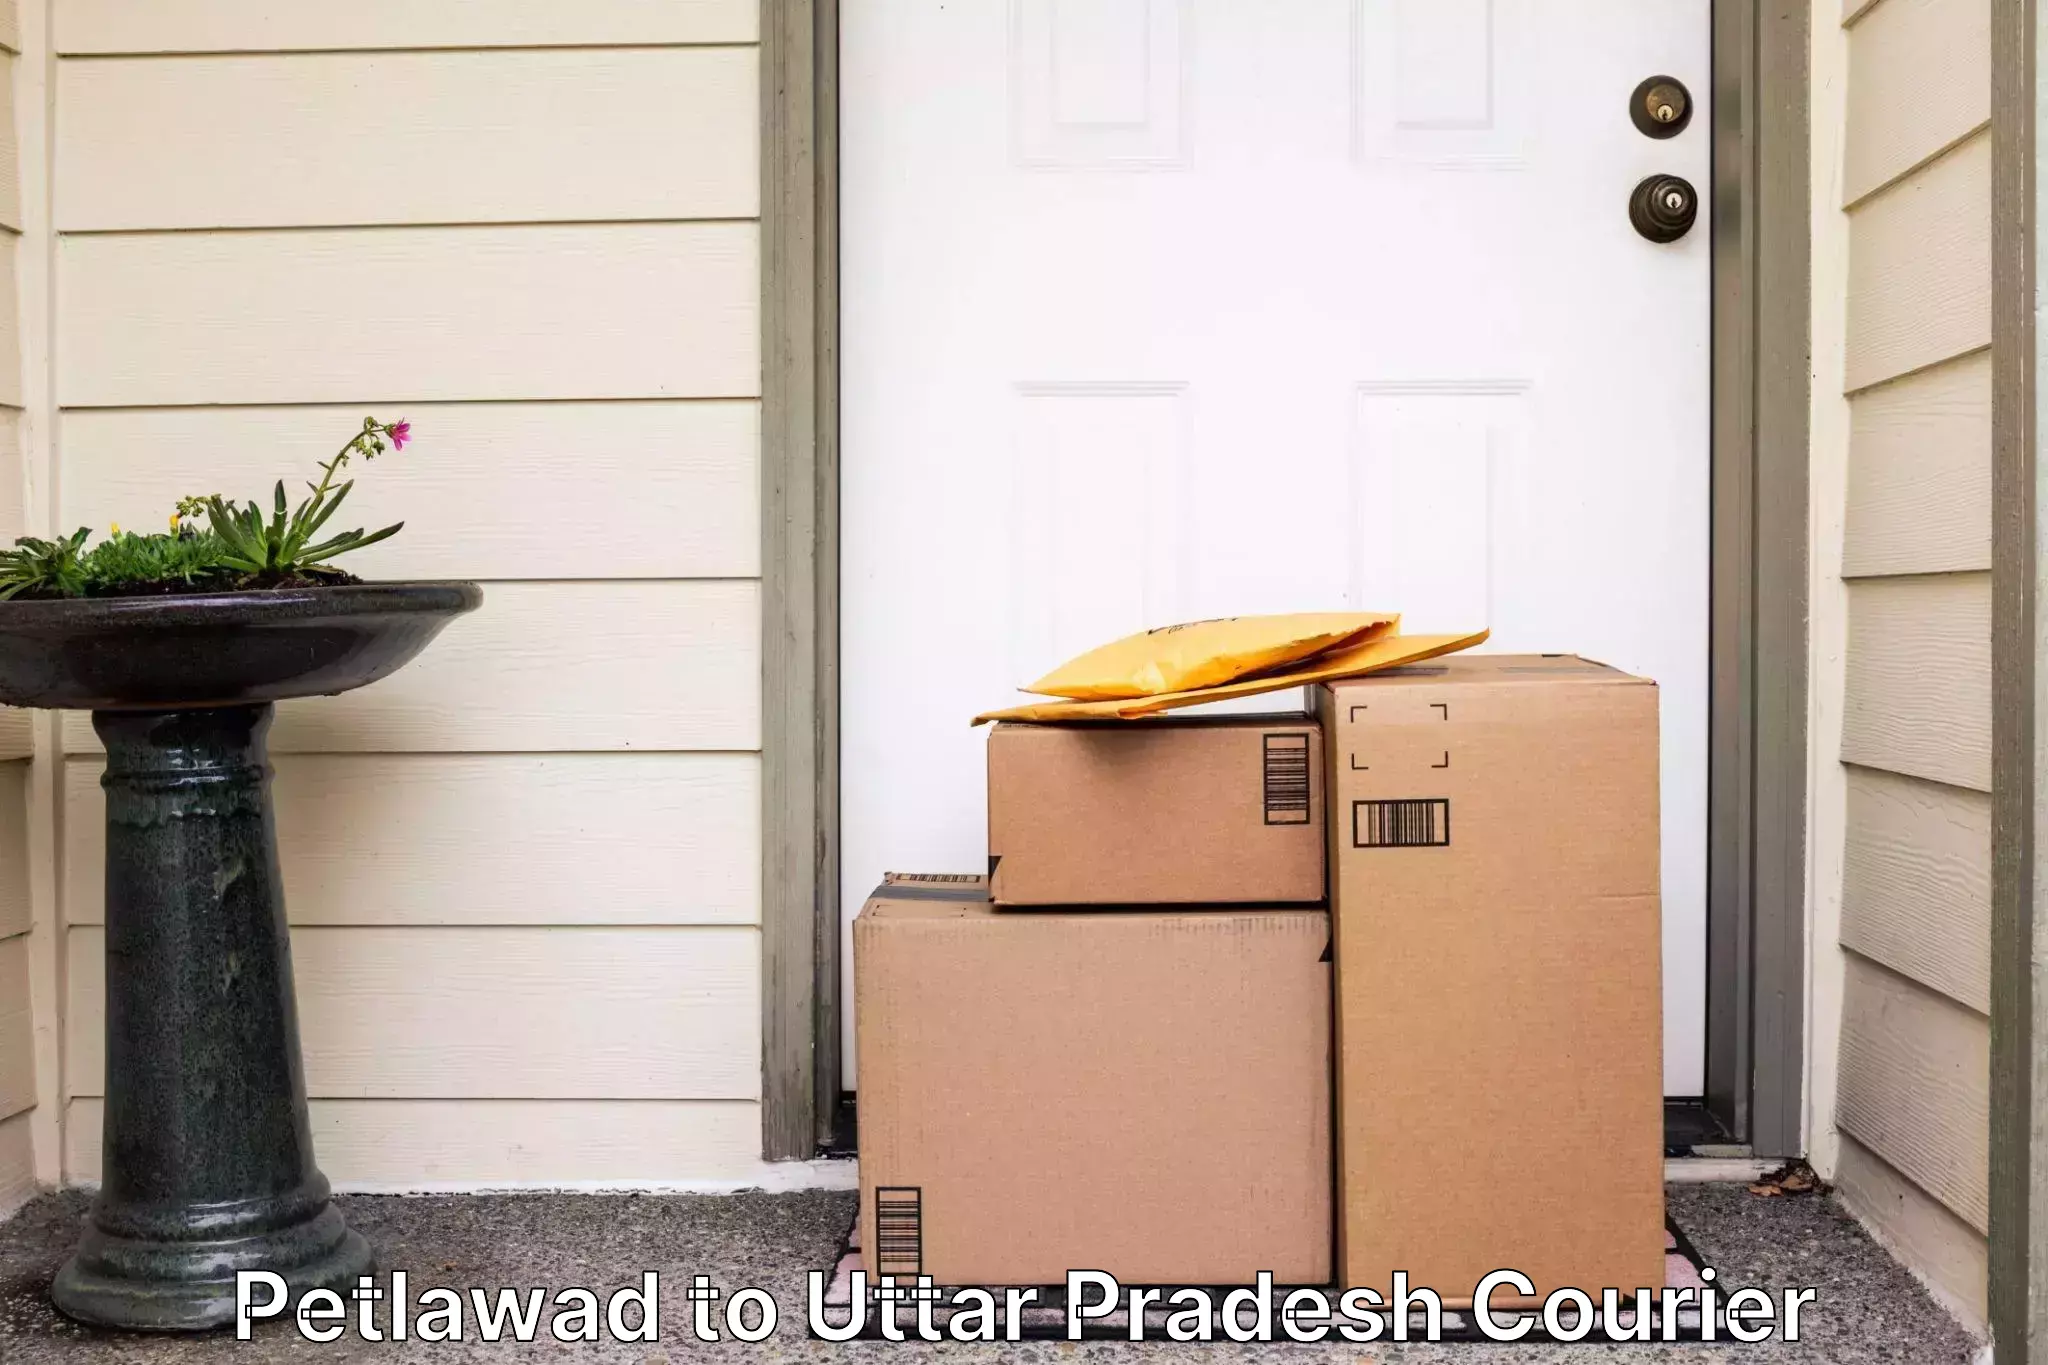 Tech-enabled shipping Petlawad to Uttar Pradesh